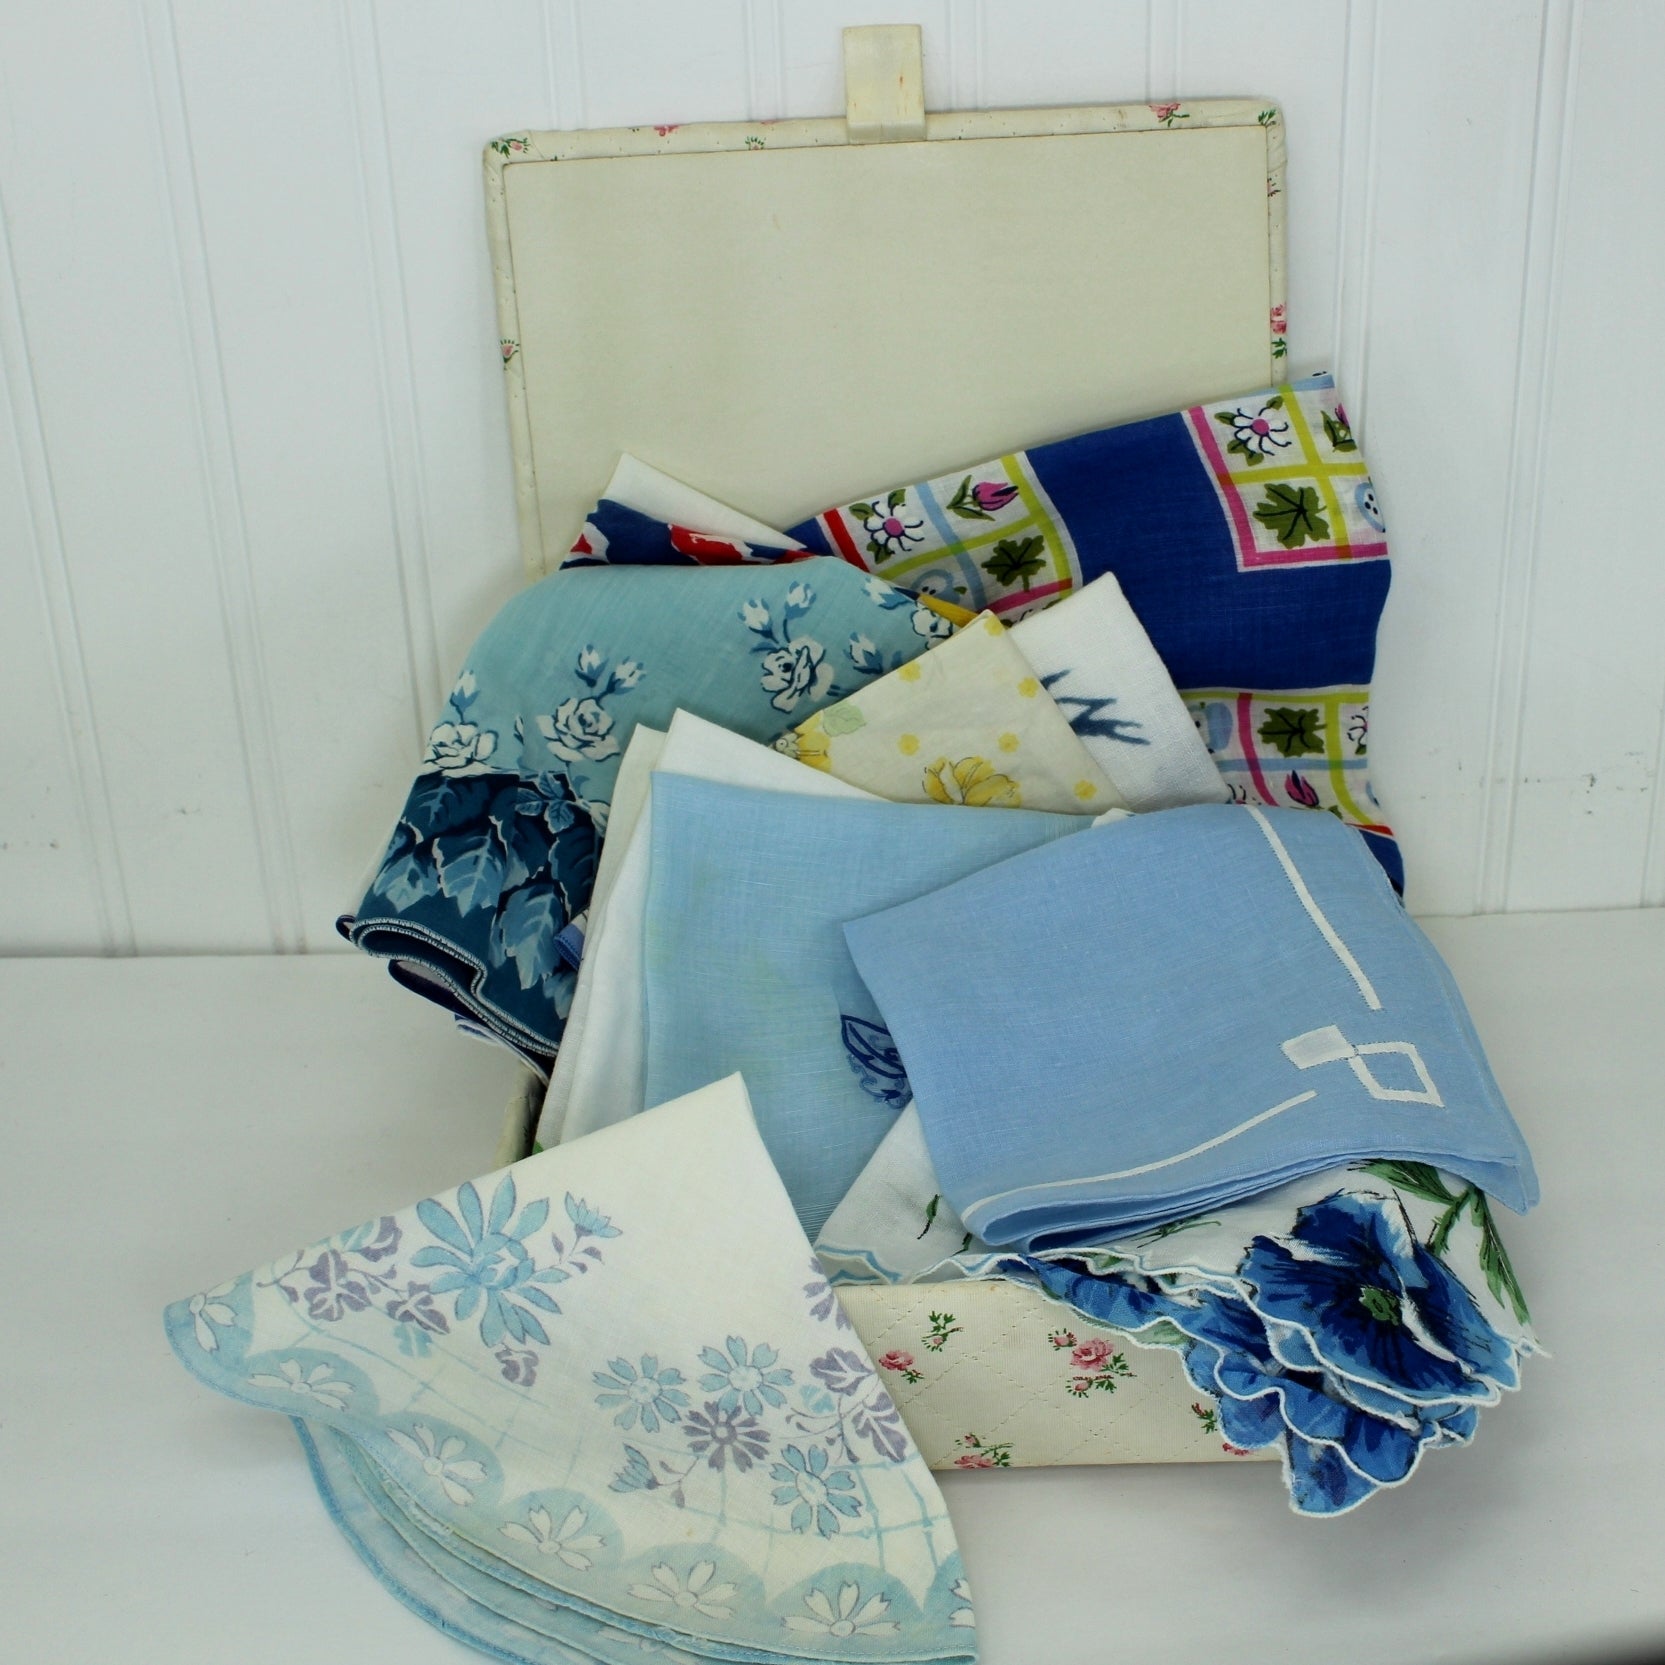 Lot 22 Handkerchiefs Blue Theme MCM Handkerchief Box DIY Clothing Crafts all handkerchiefs in box